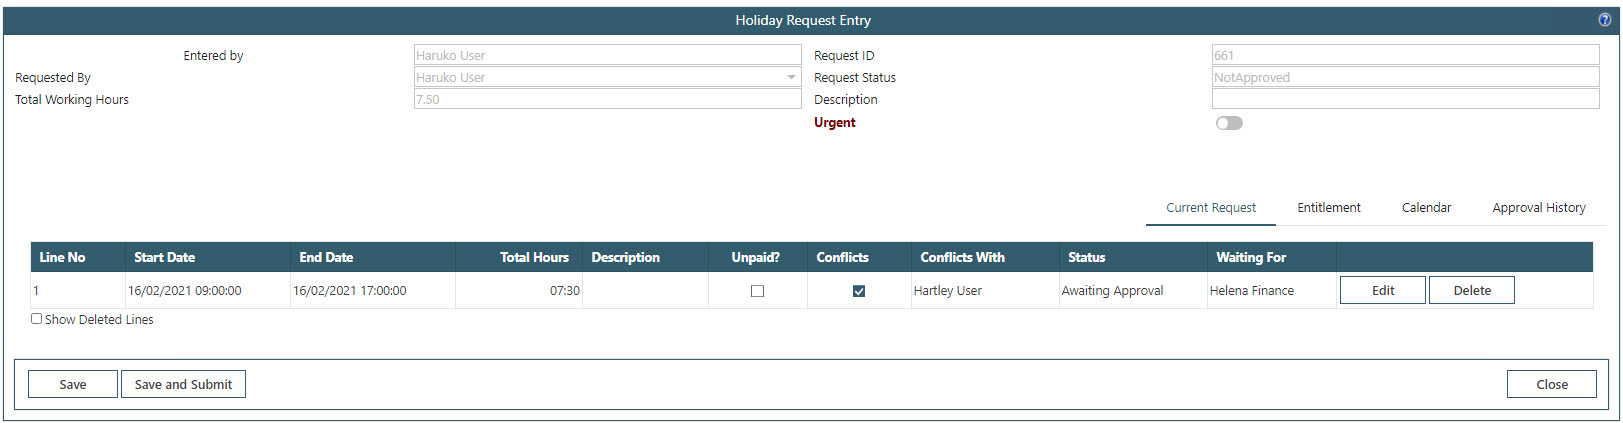 Sicon WAP Holidays Help and User Guide - WAP Holidays HUG Section 14.1 - Image 2